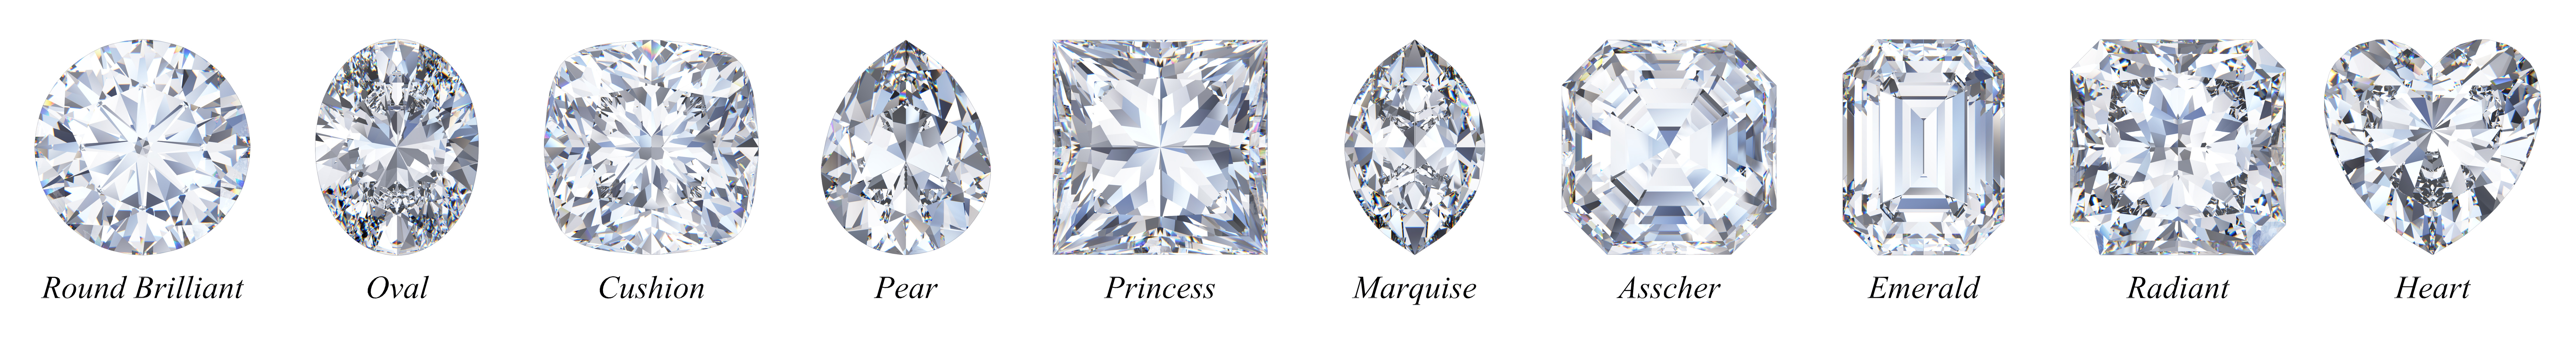 Diamond Cuts & Shapes - Mariloff Diamonds & Fine Jewelry Dallas TX